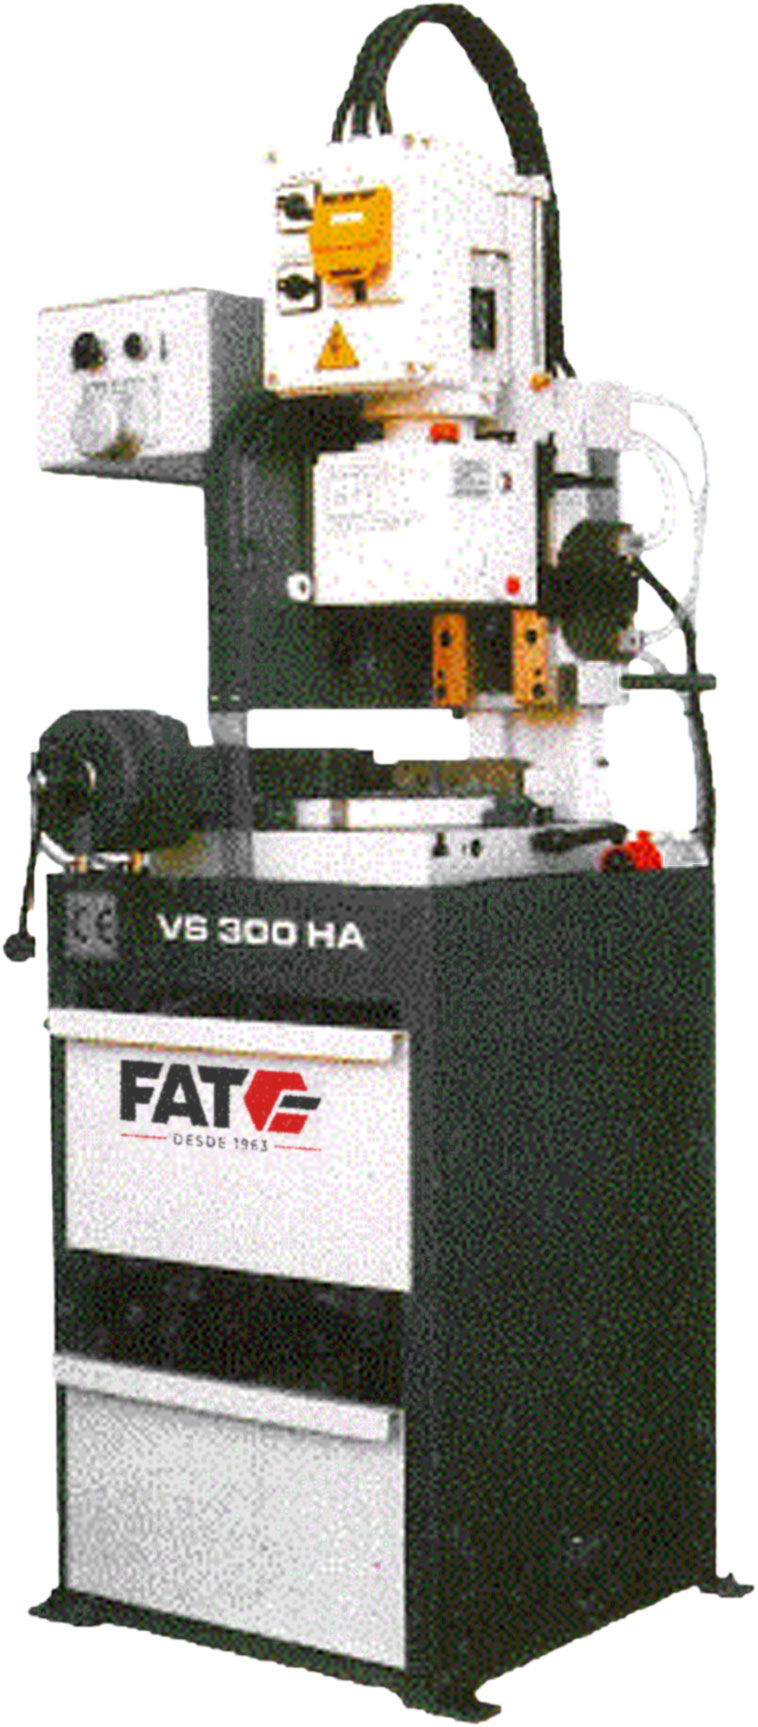 vs-300-ha-vs-370-ha-tronzadora-corte-acero-hierro-FAT-IMG